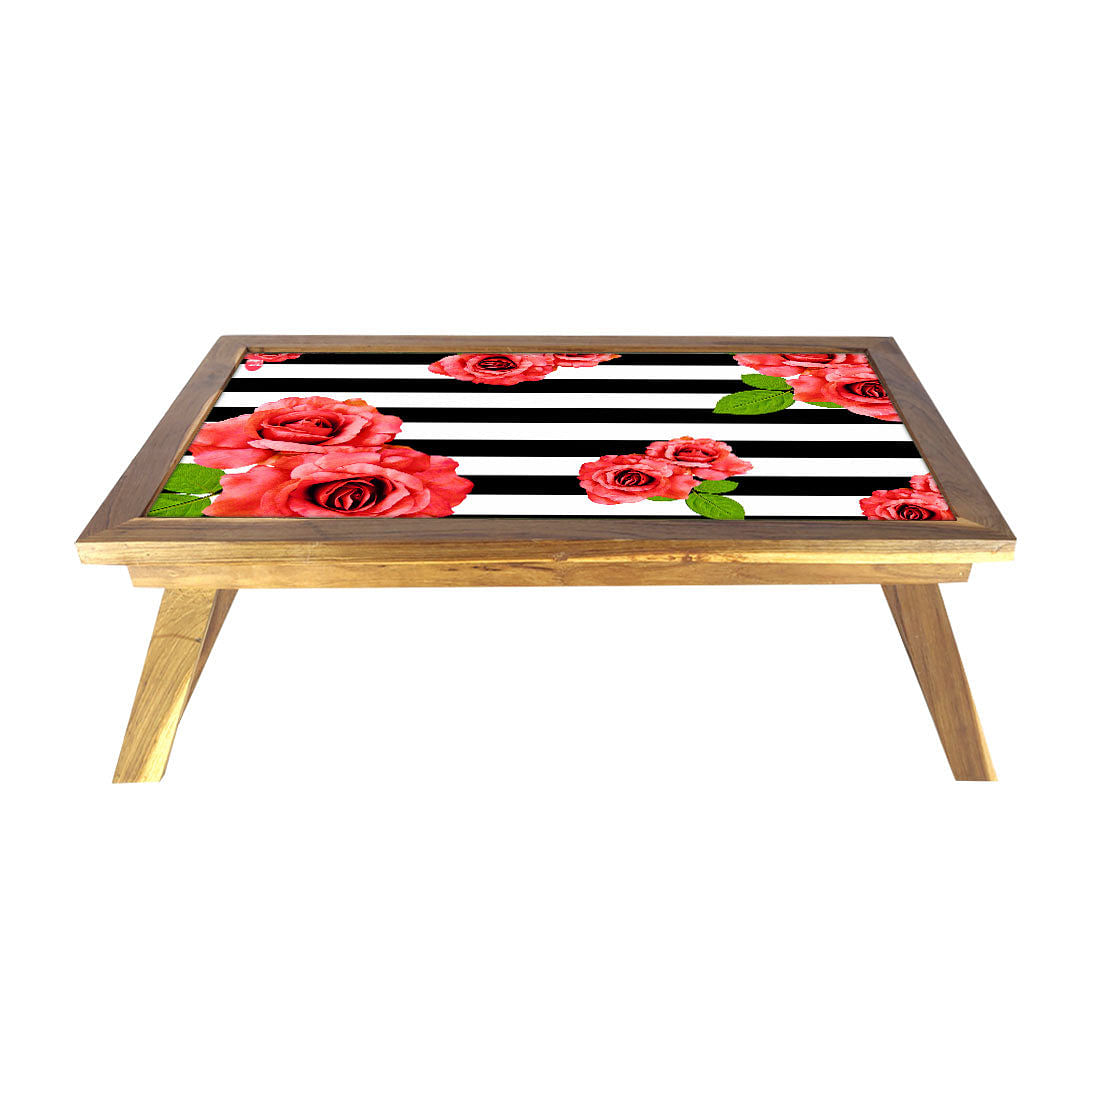 Nutcase Folding Floral Stripes Bed Table for Breakfast Nutcase